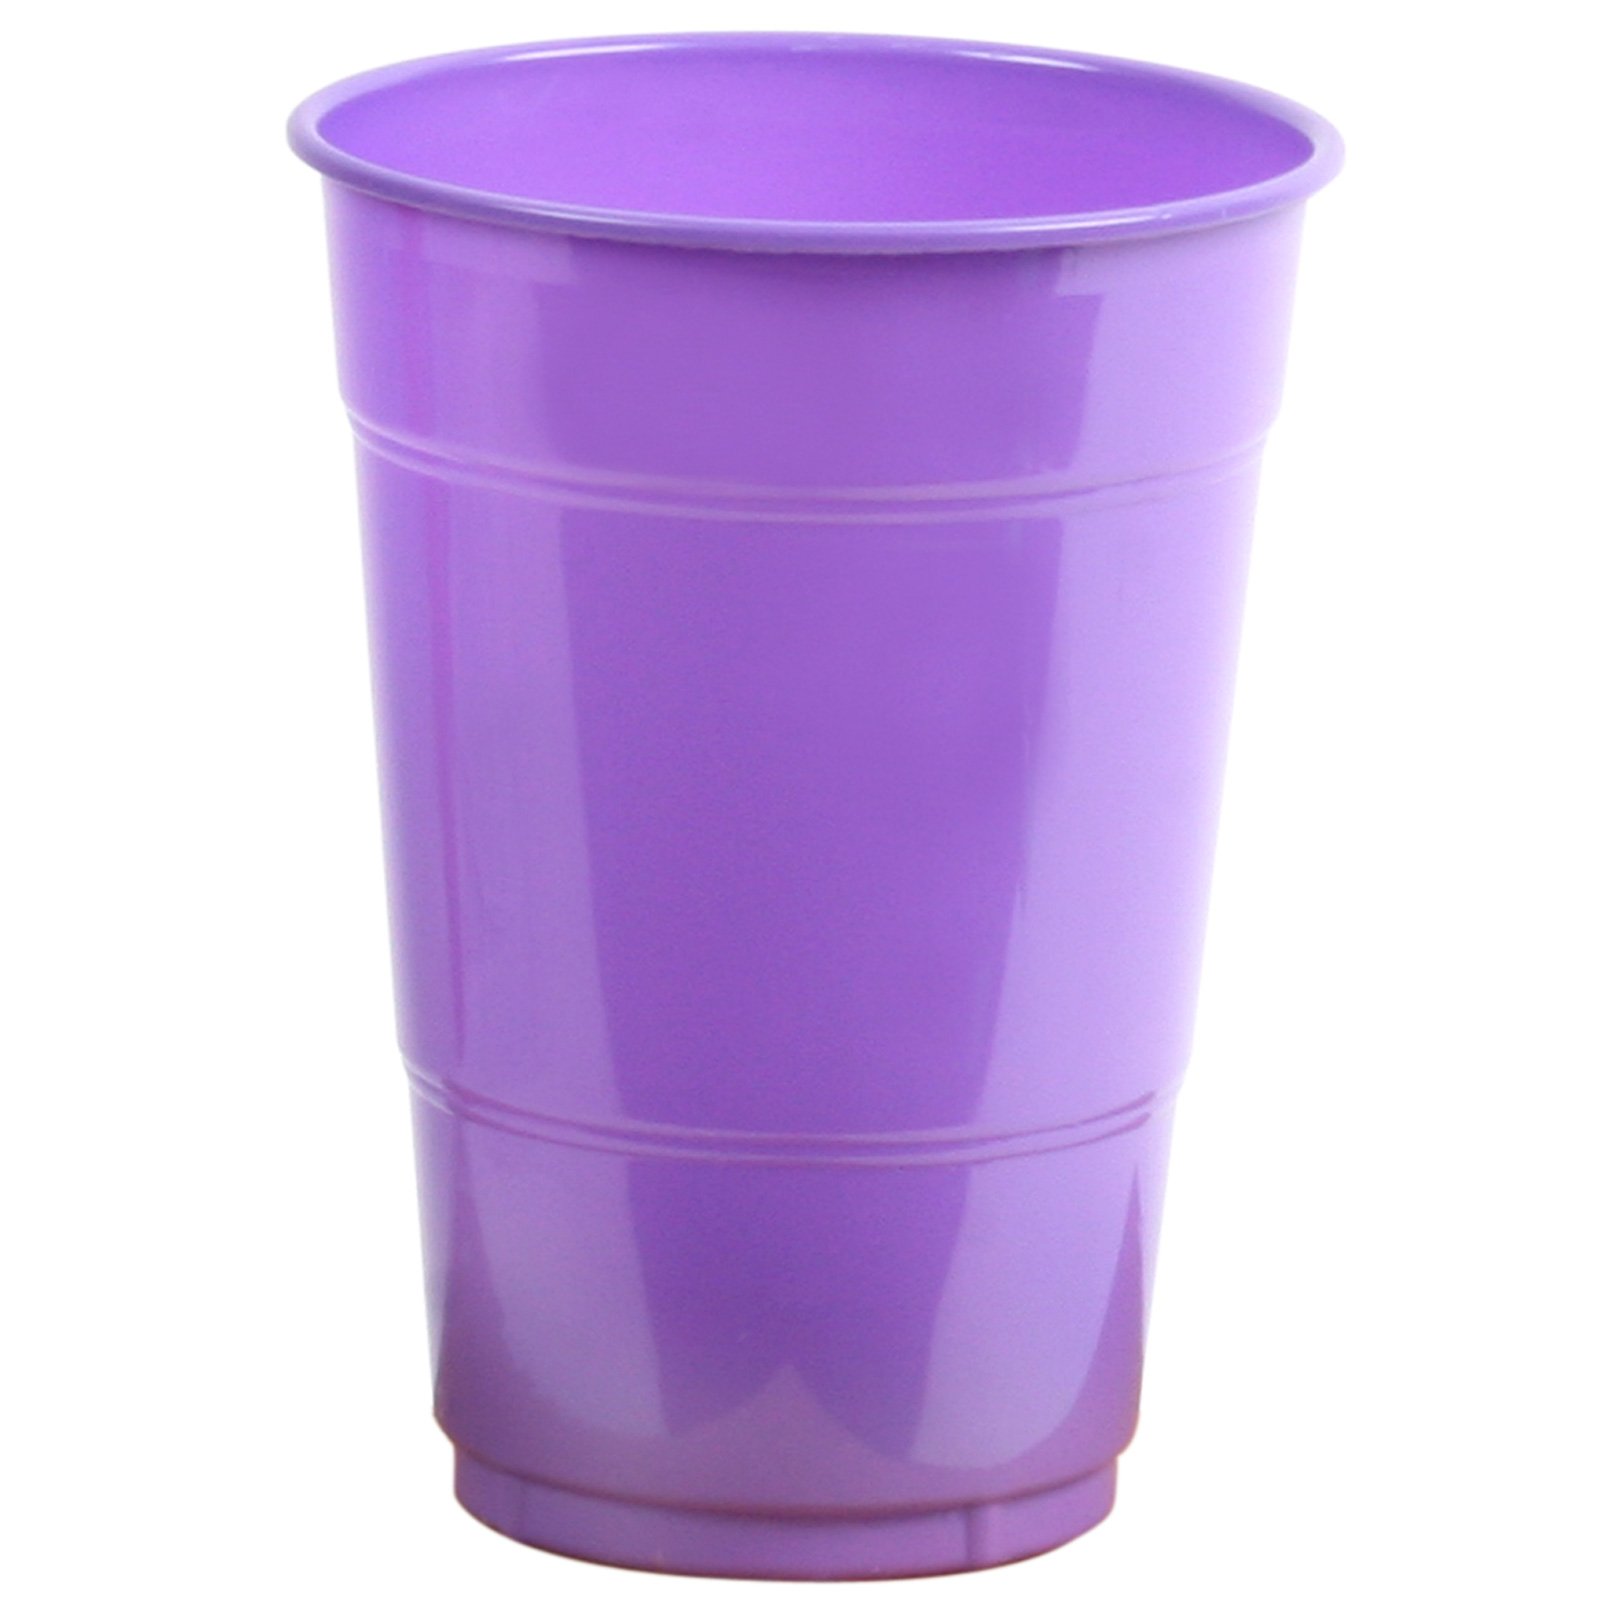 Simply Purple 16 oz. Plastic Cups (20 count)